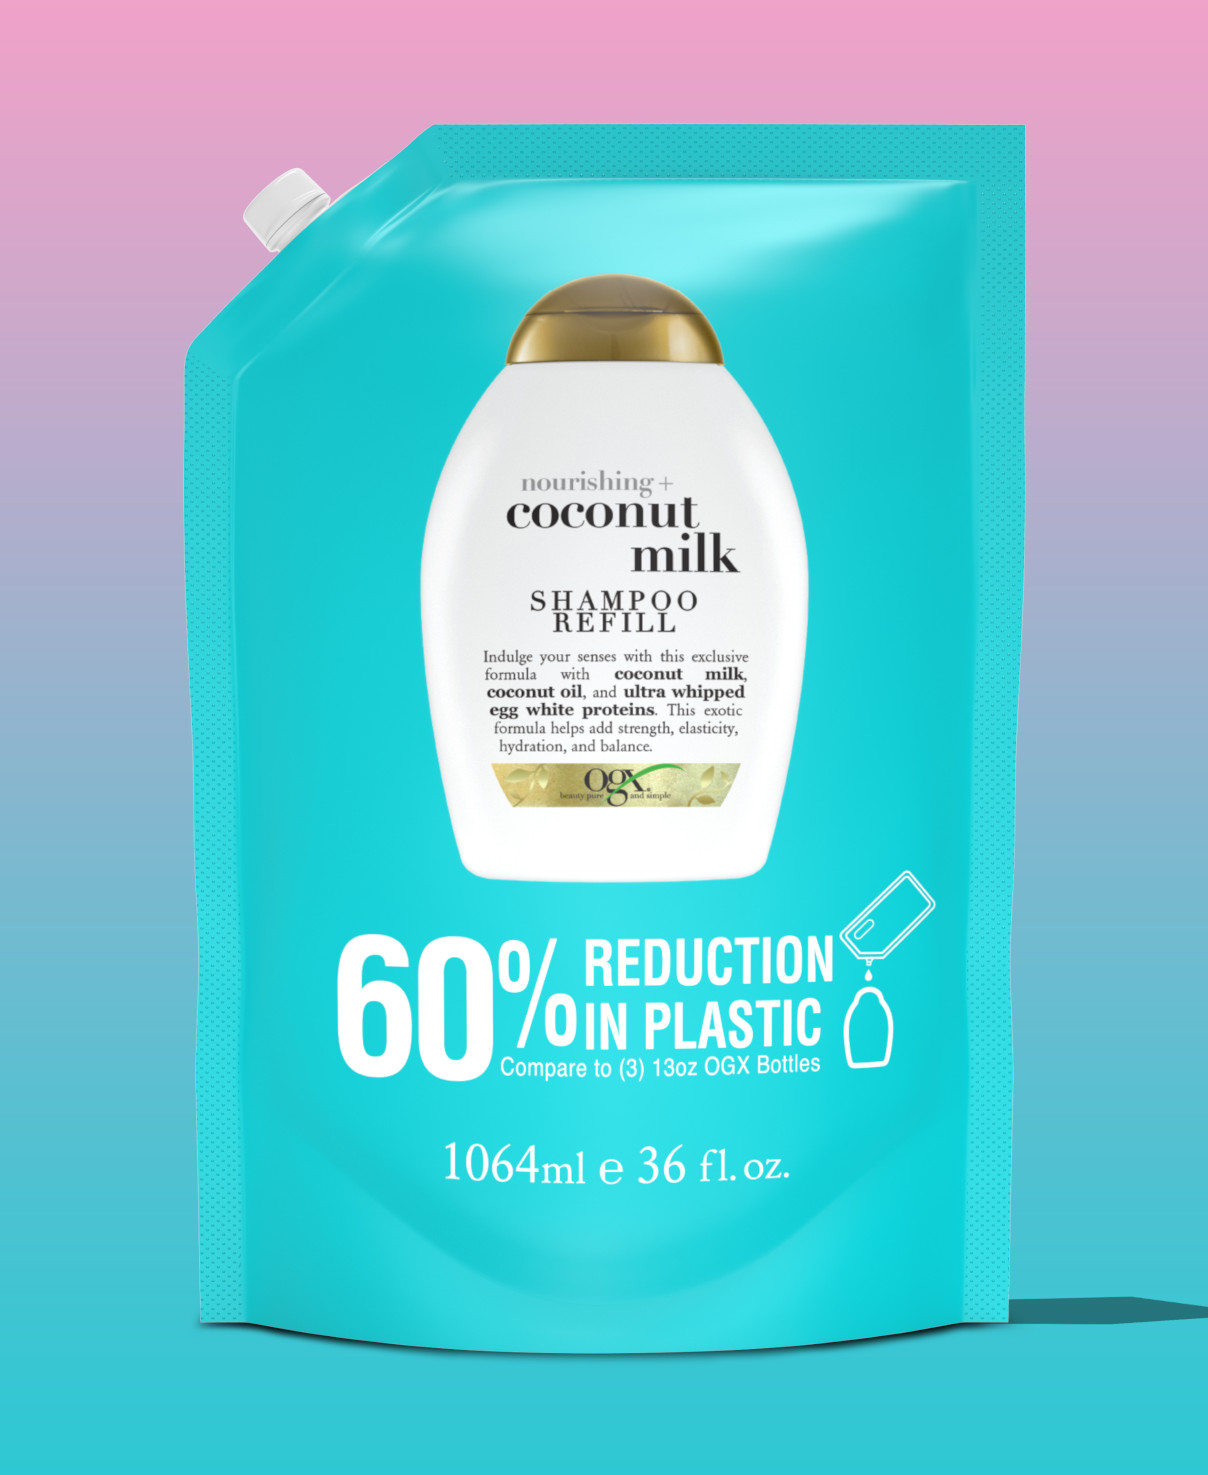 nourishing-coconut-milk-shampoo-refill-01